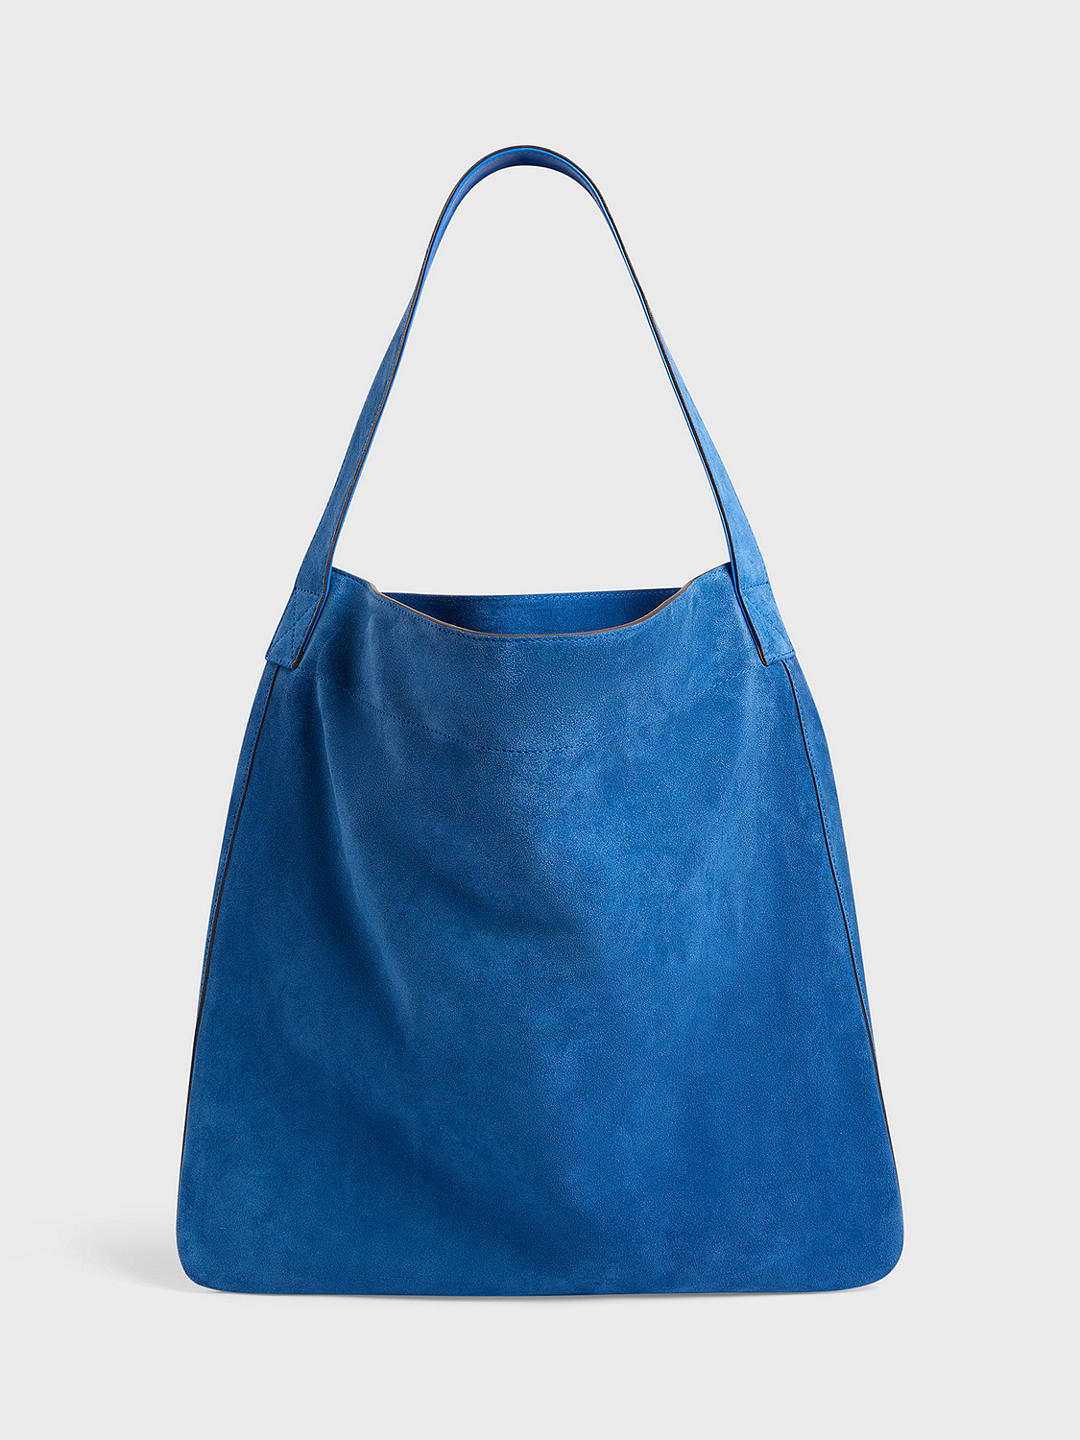 Gerard Darel The Lady Bag, Blue